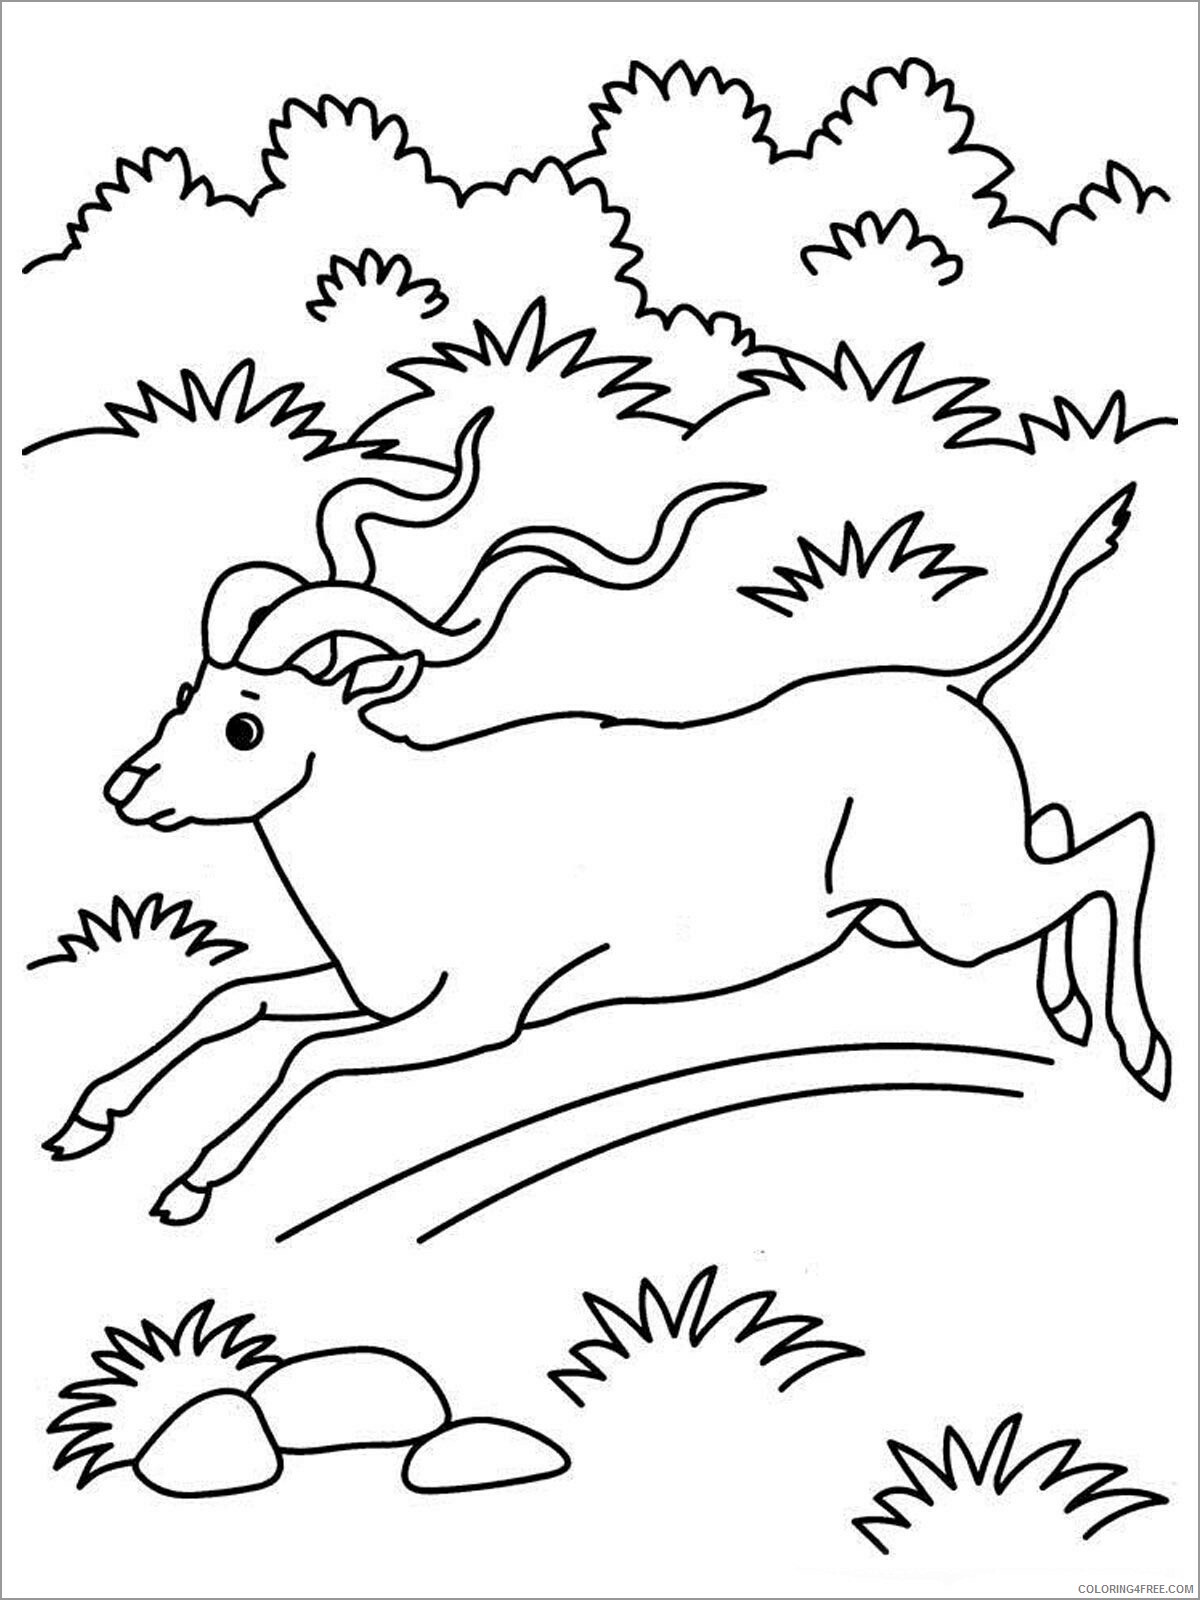 Antelope Coloring Pages Animal Printable Sheets running antelope 2021 0095 Coloring4free